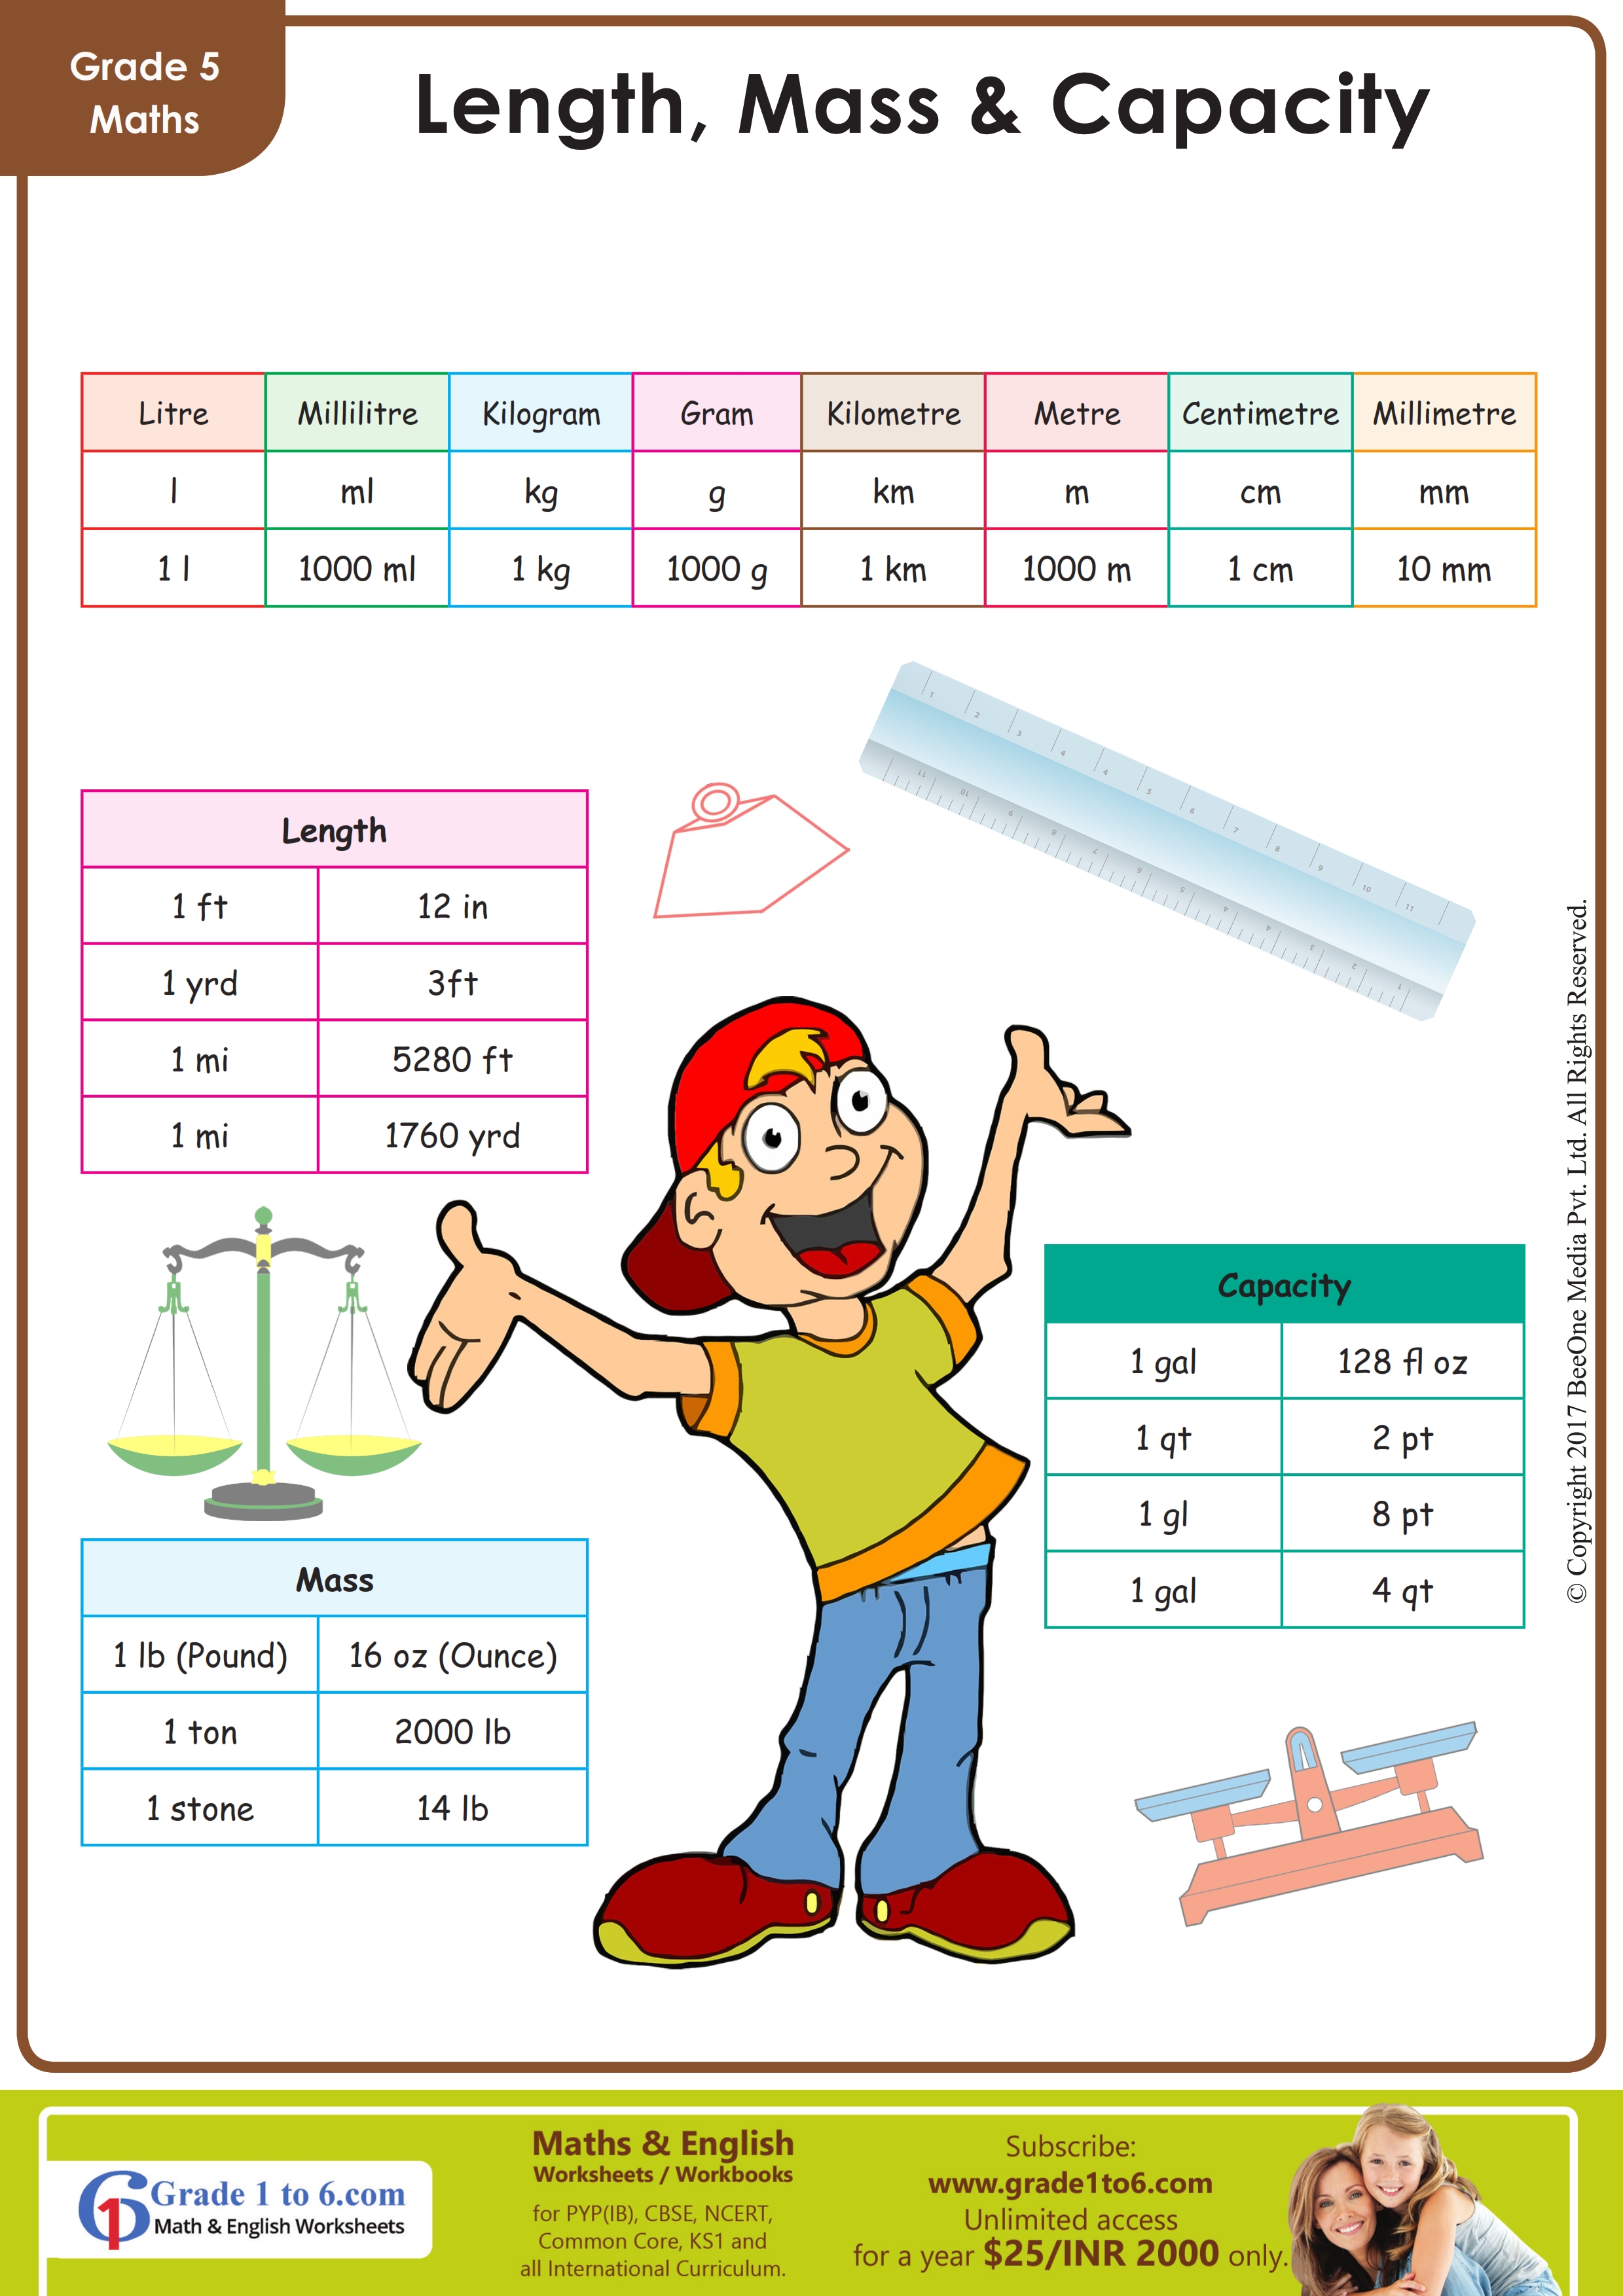 Length, Mass & Capacity Measurement chart